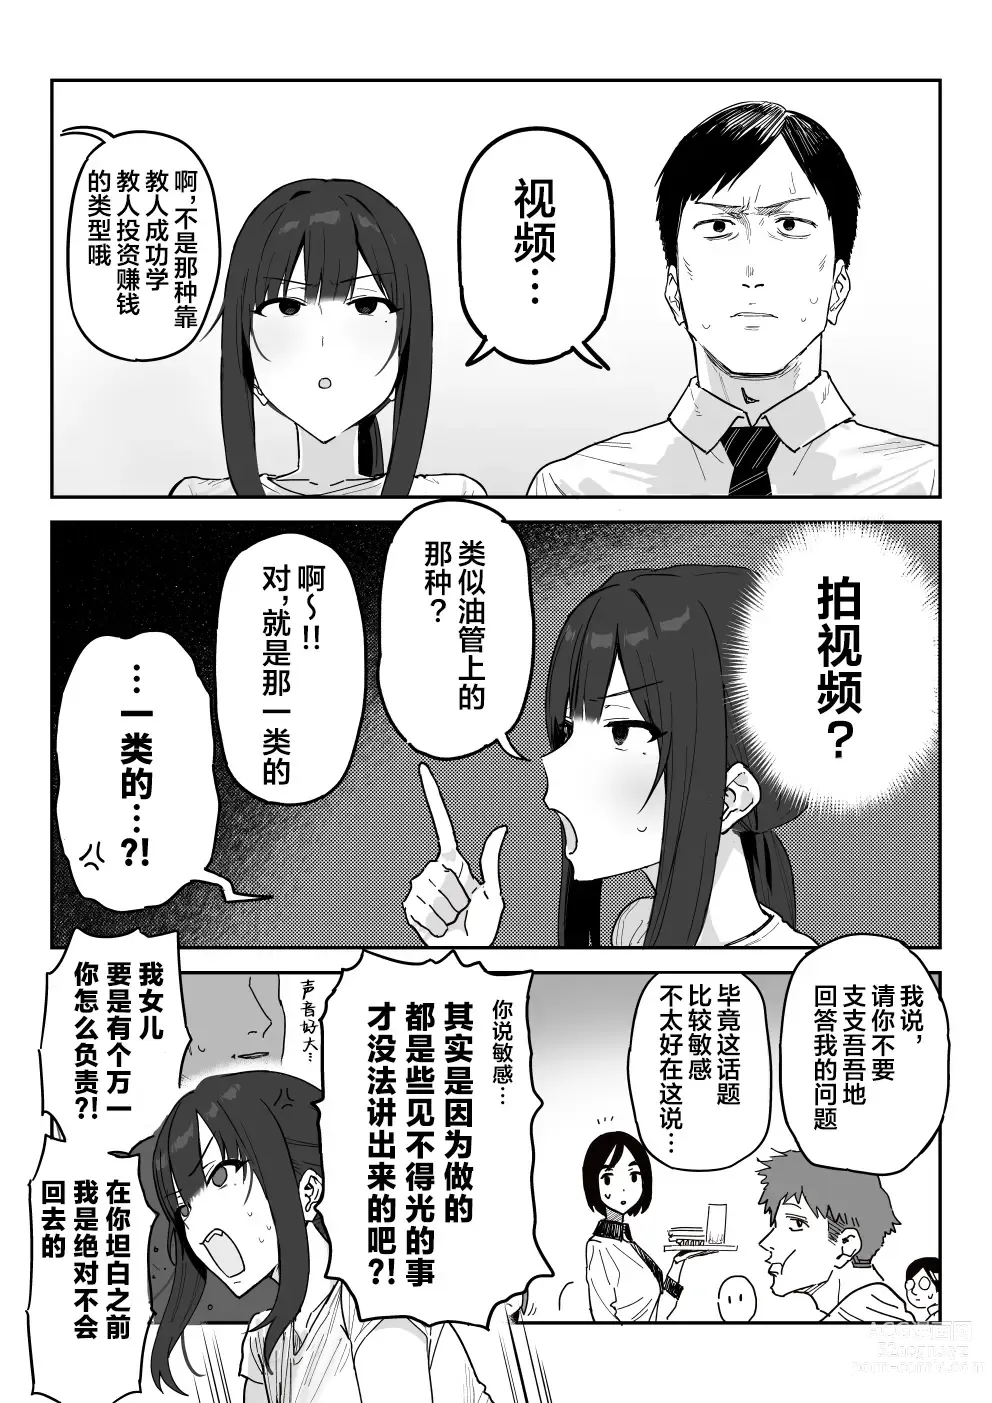 Page 7 of doujinshi 种崎佳织(39岁)代替女儿同人AV出道